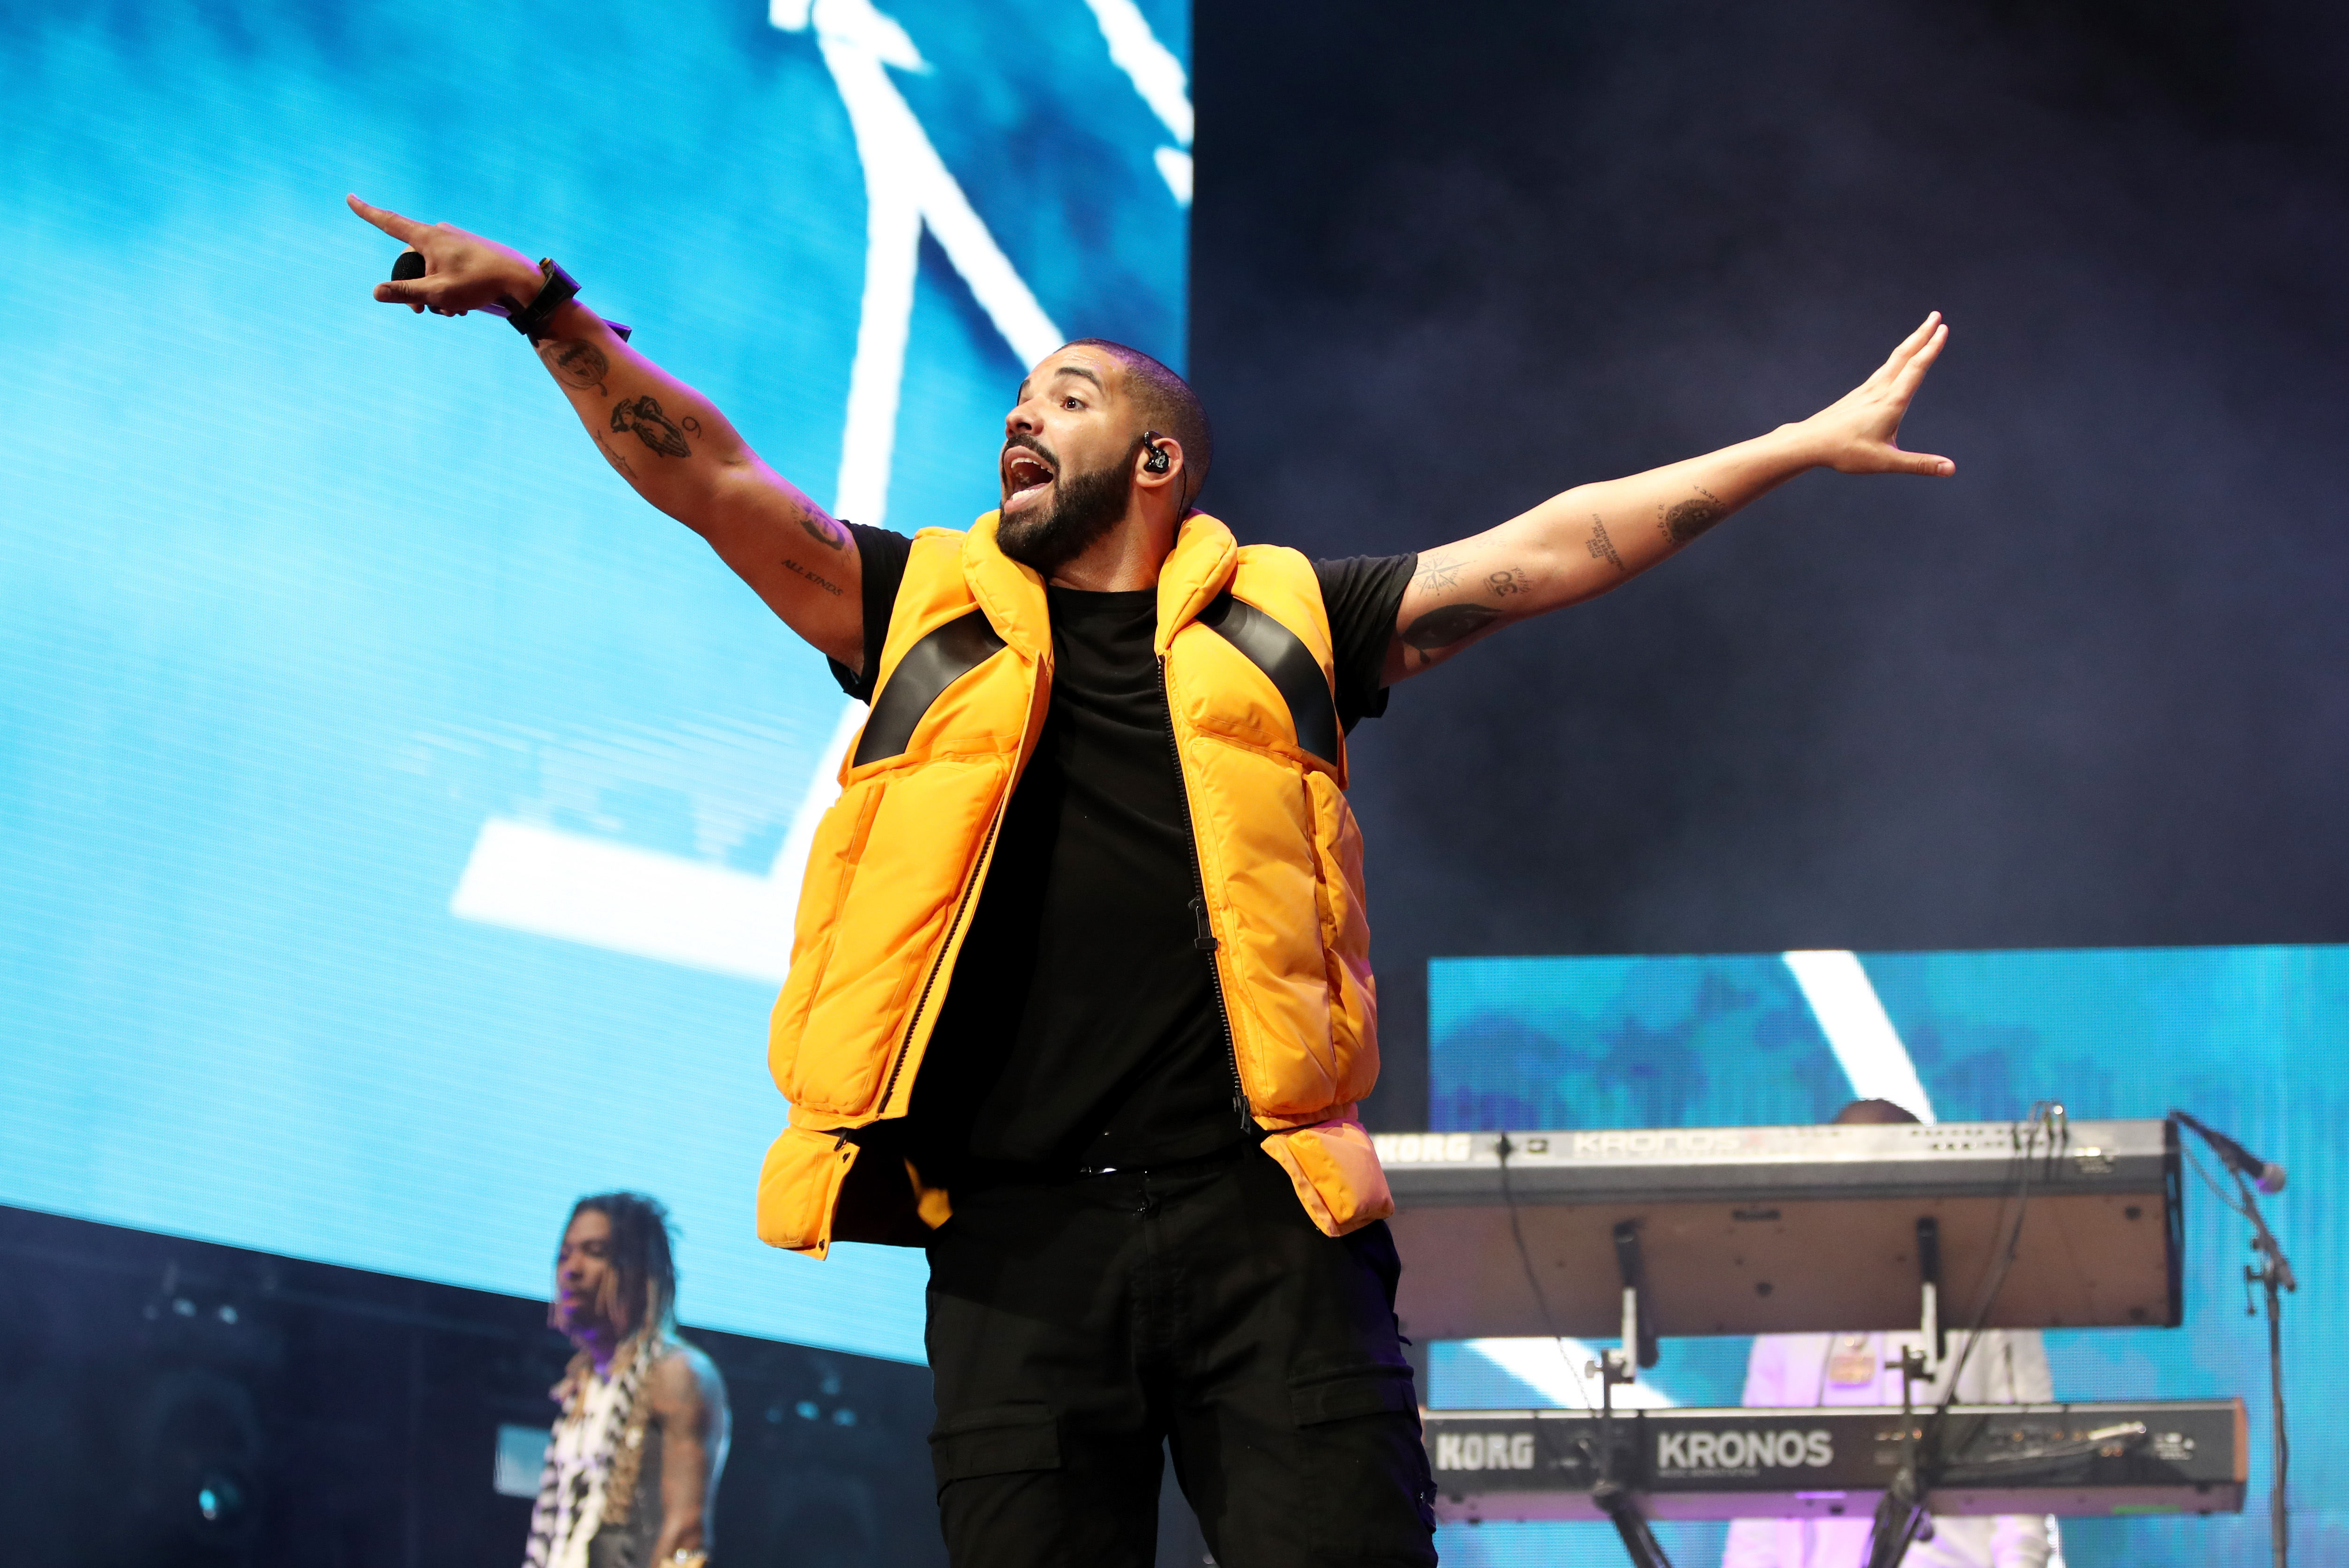 Drake - "Duppy freestyle," Pusha T diss